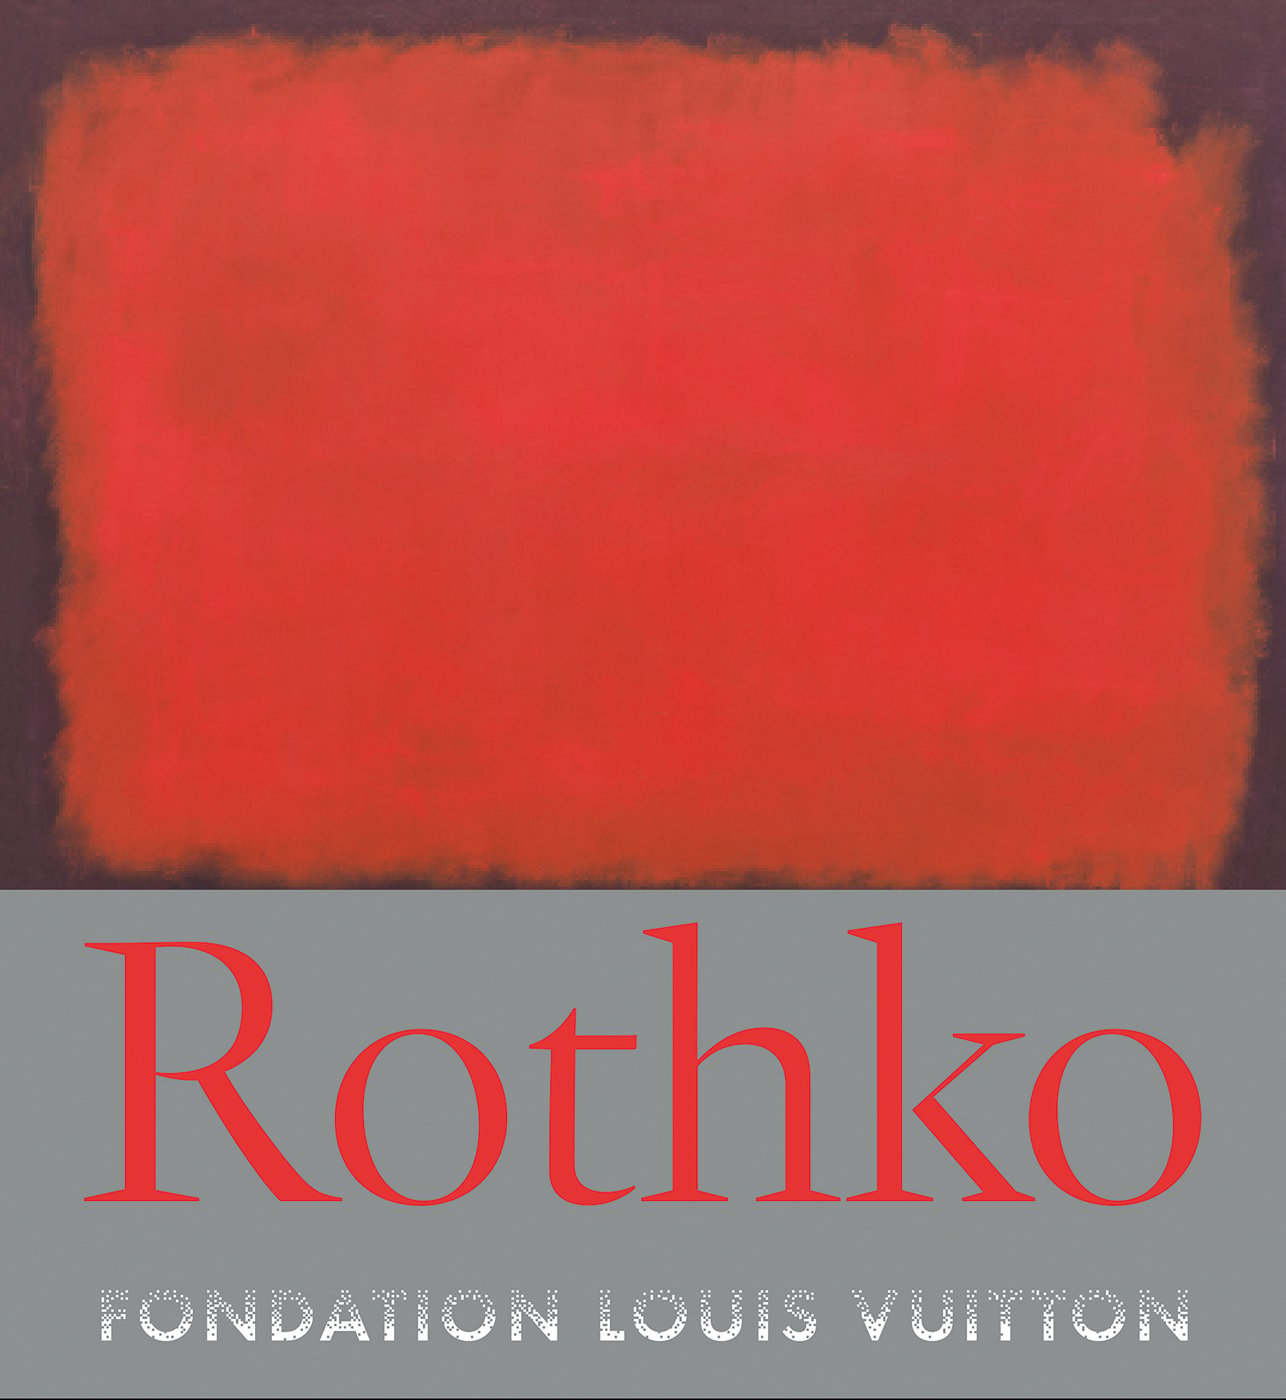 The Fondation Louis Vuitton Foundation Exhibits Mark Rothko's Work